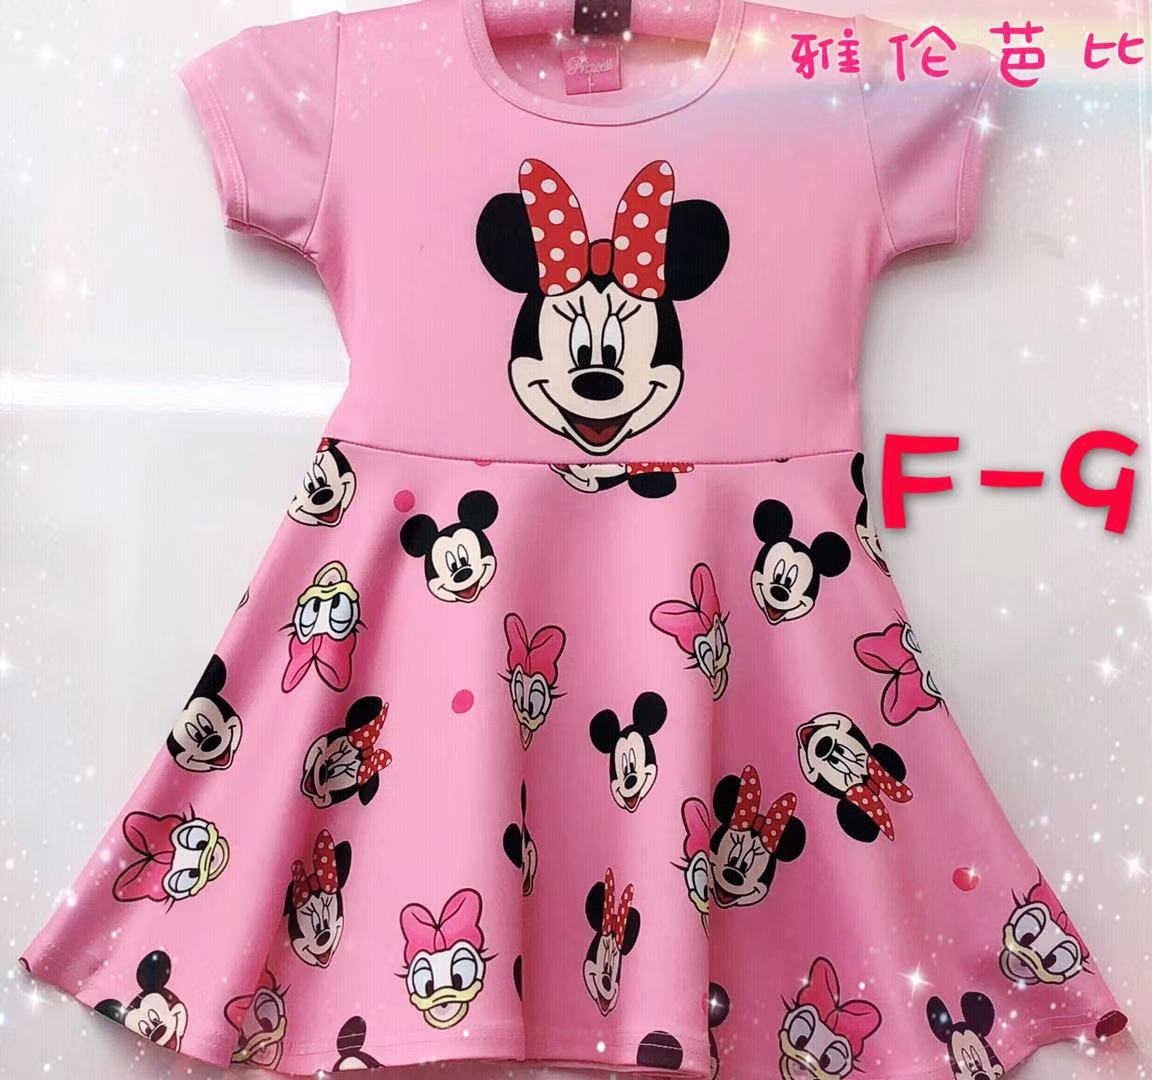 Disney Minnie Mouse 3-in-1 Pack Bikini Panty With Ribbon Girls Kids  Underwear